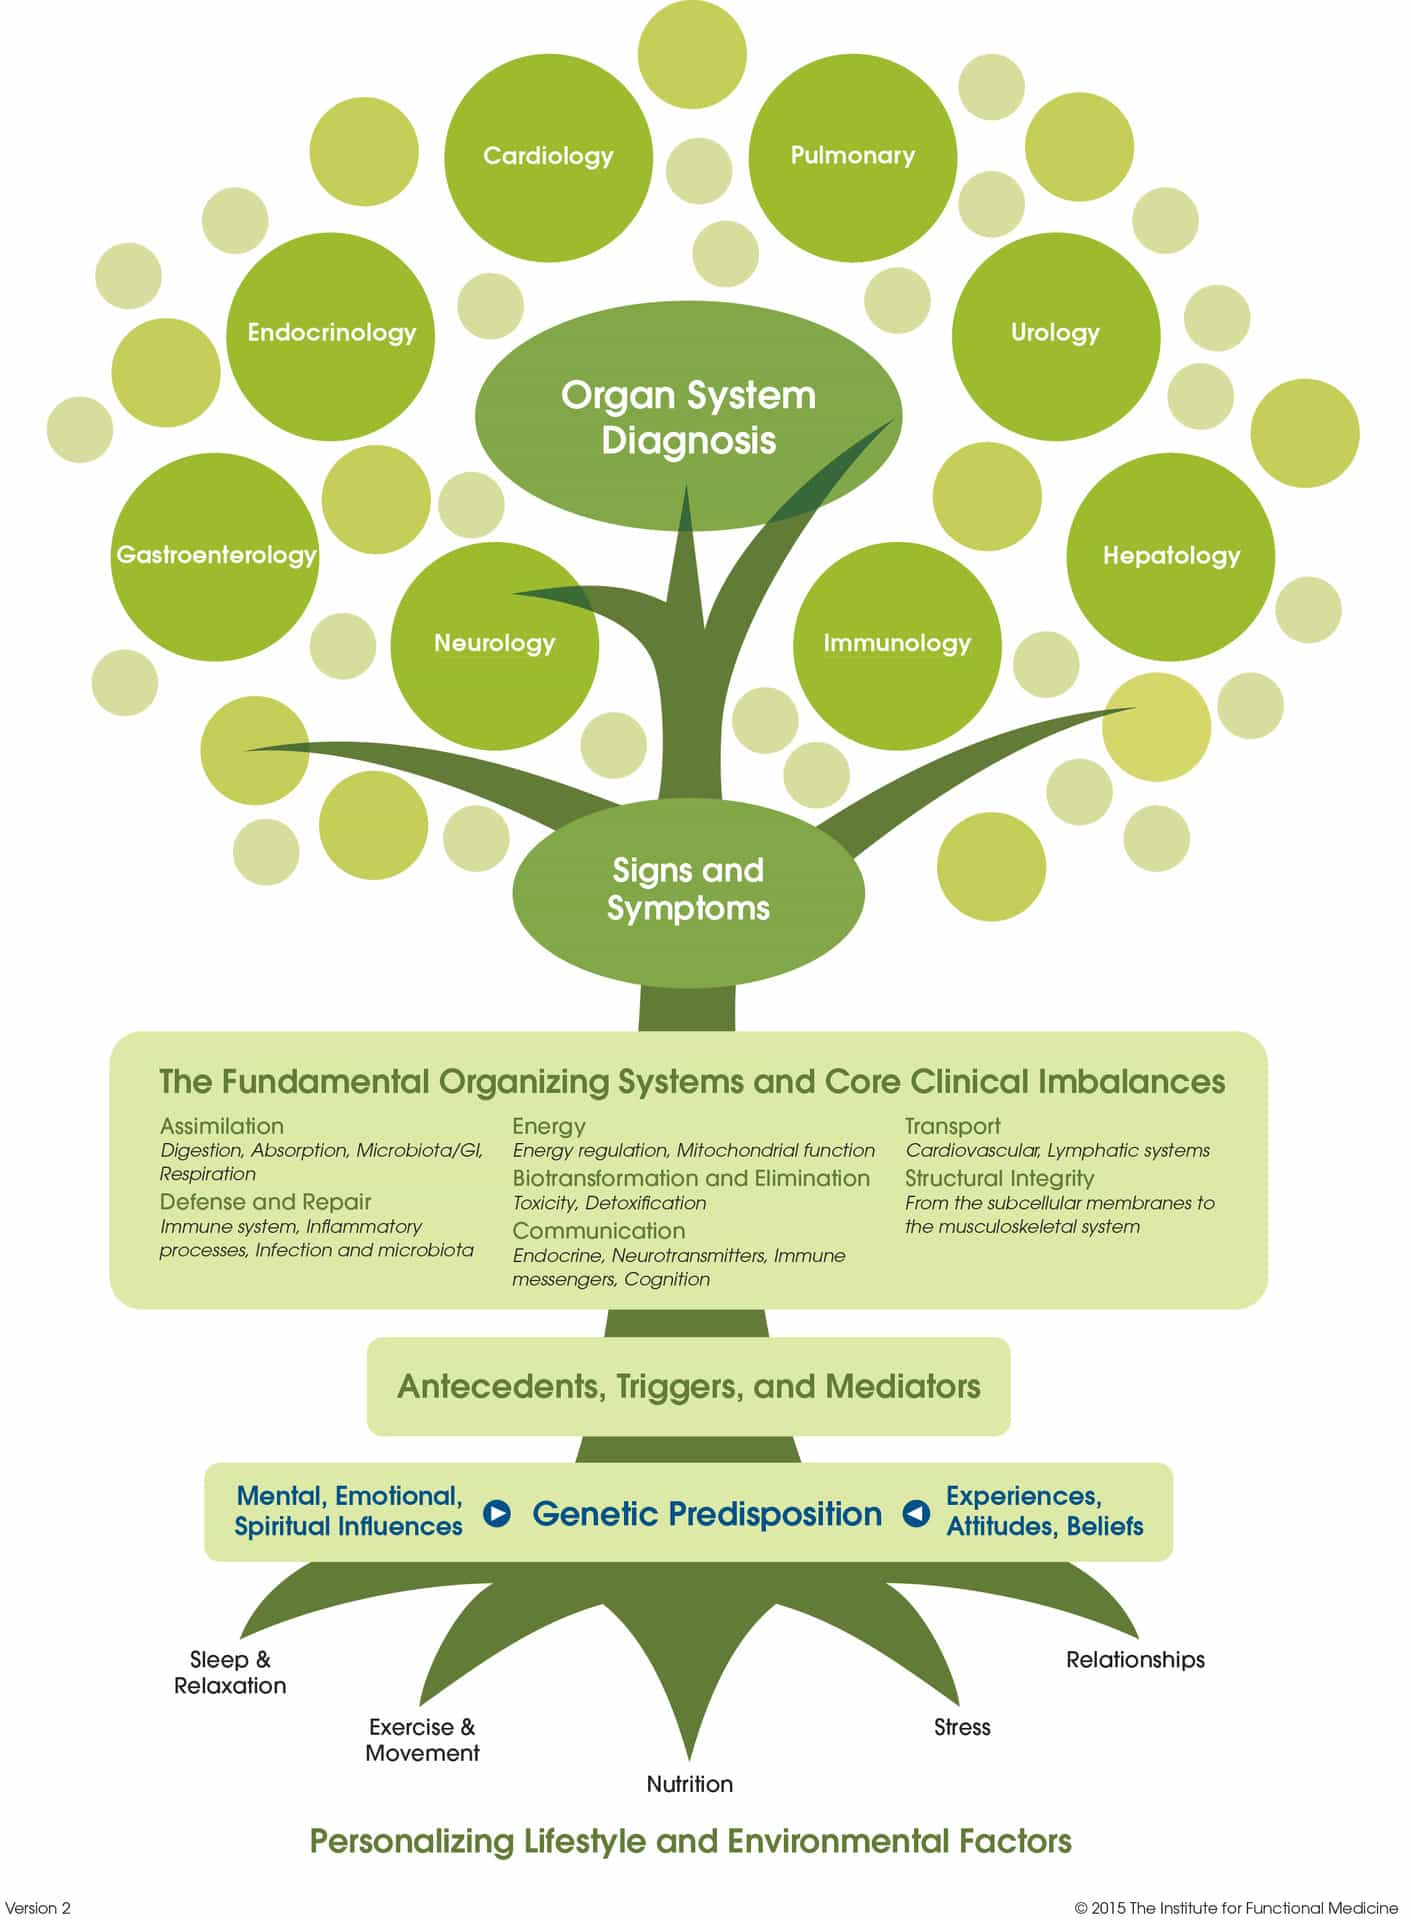 The Functional Medicine Tree